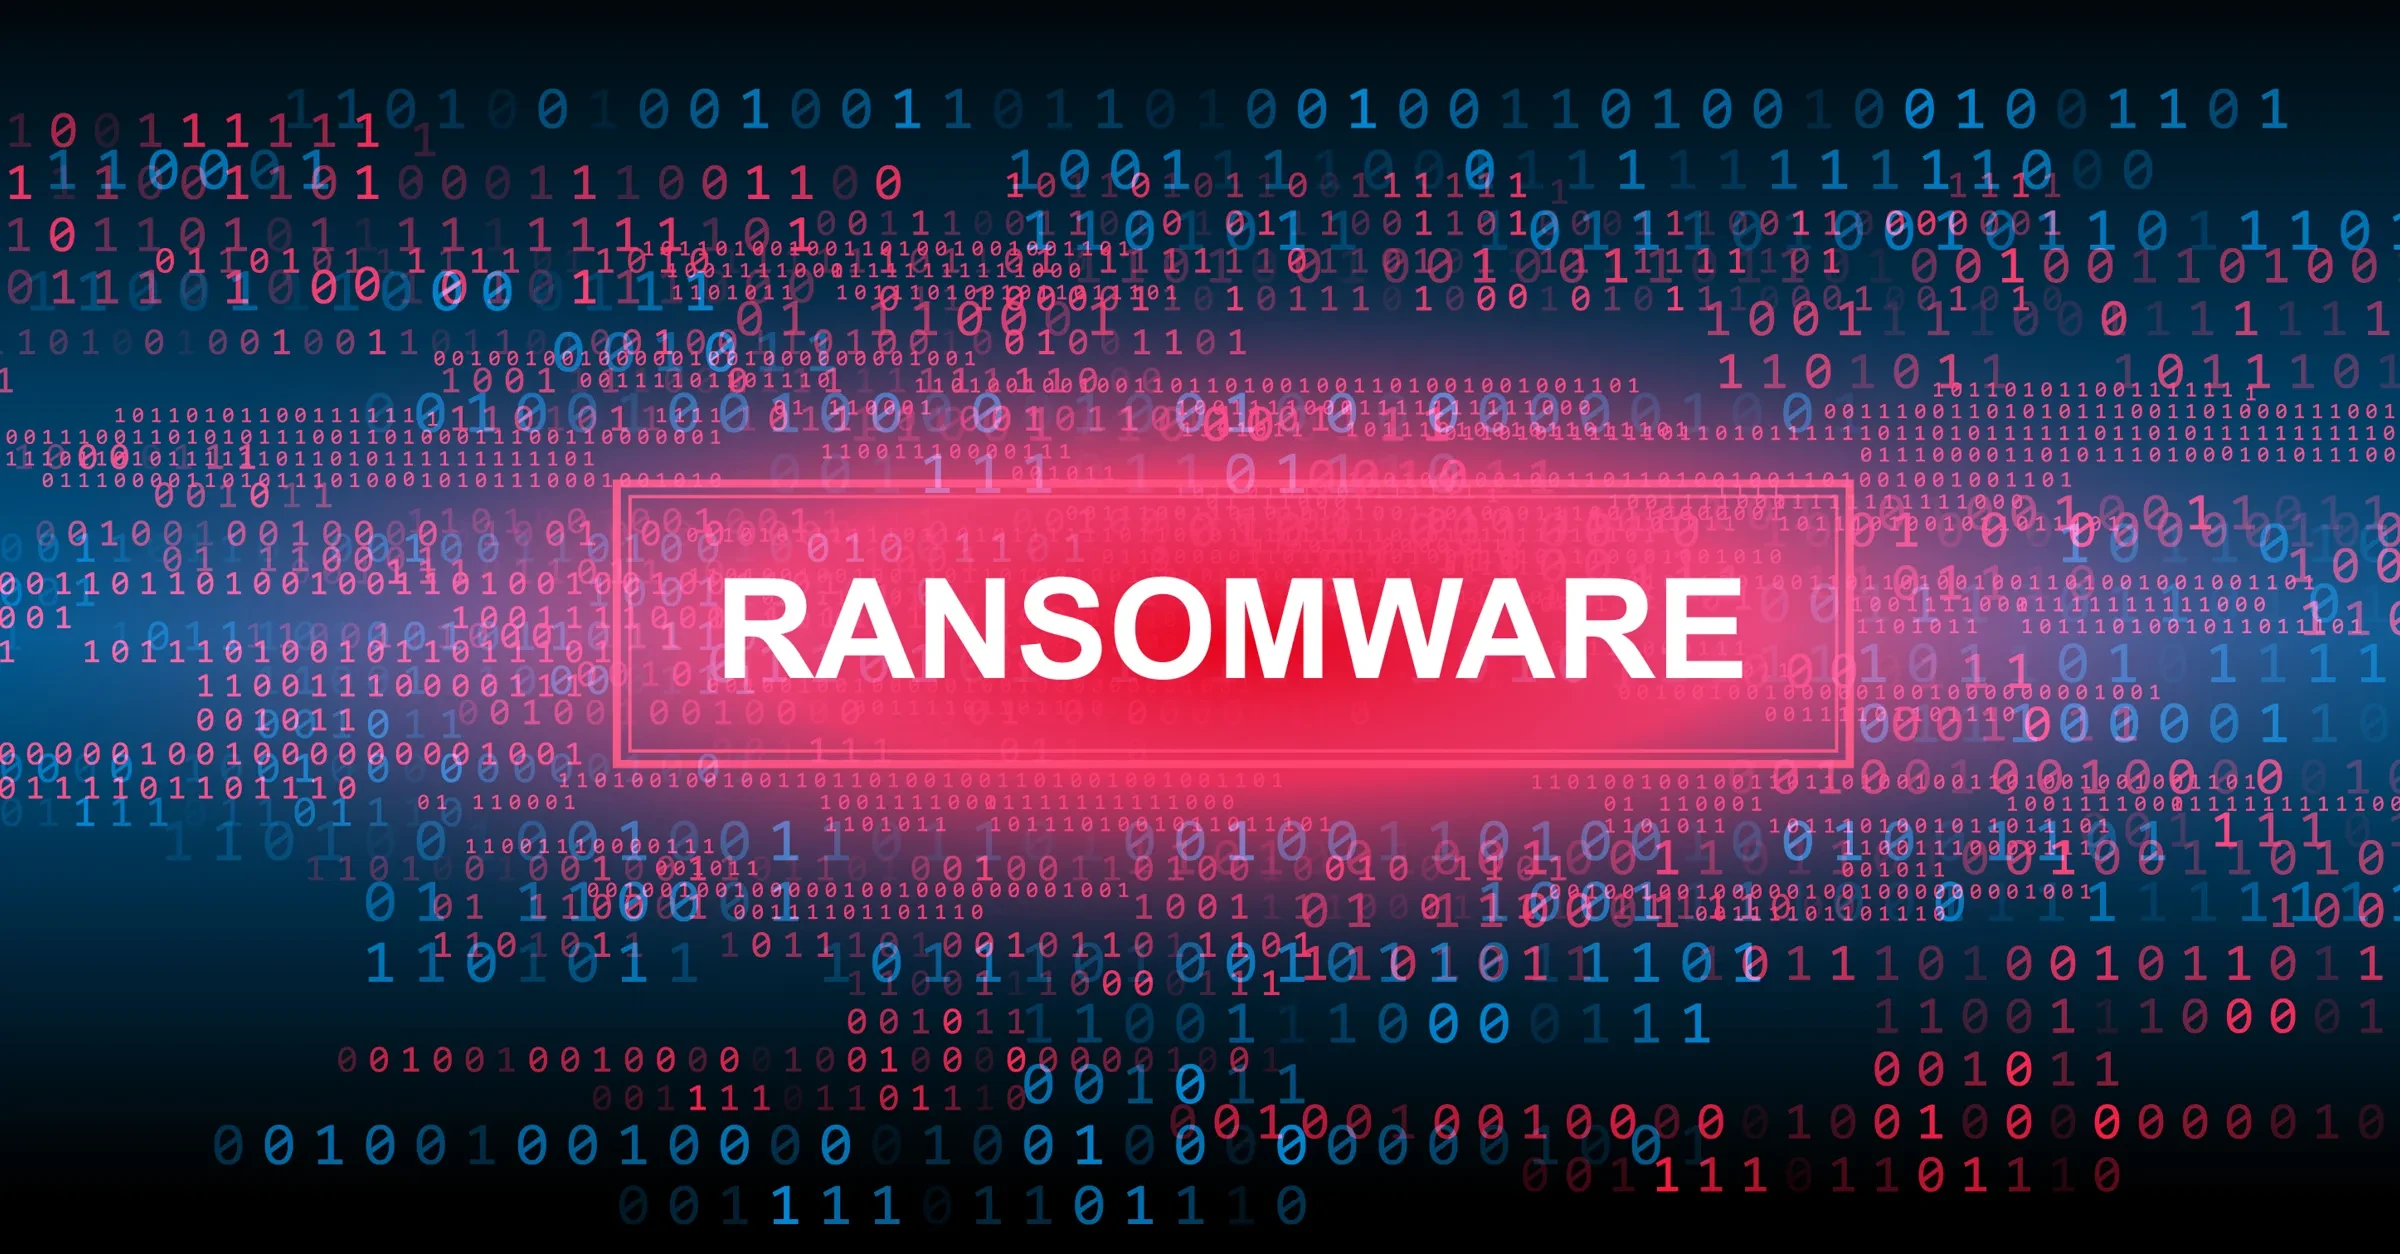 Ransomware prevention